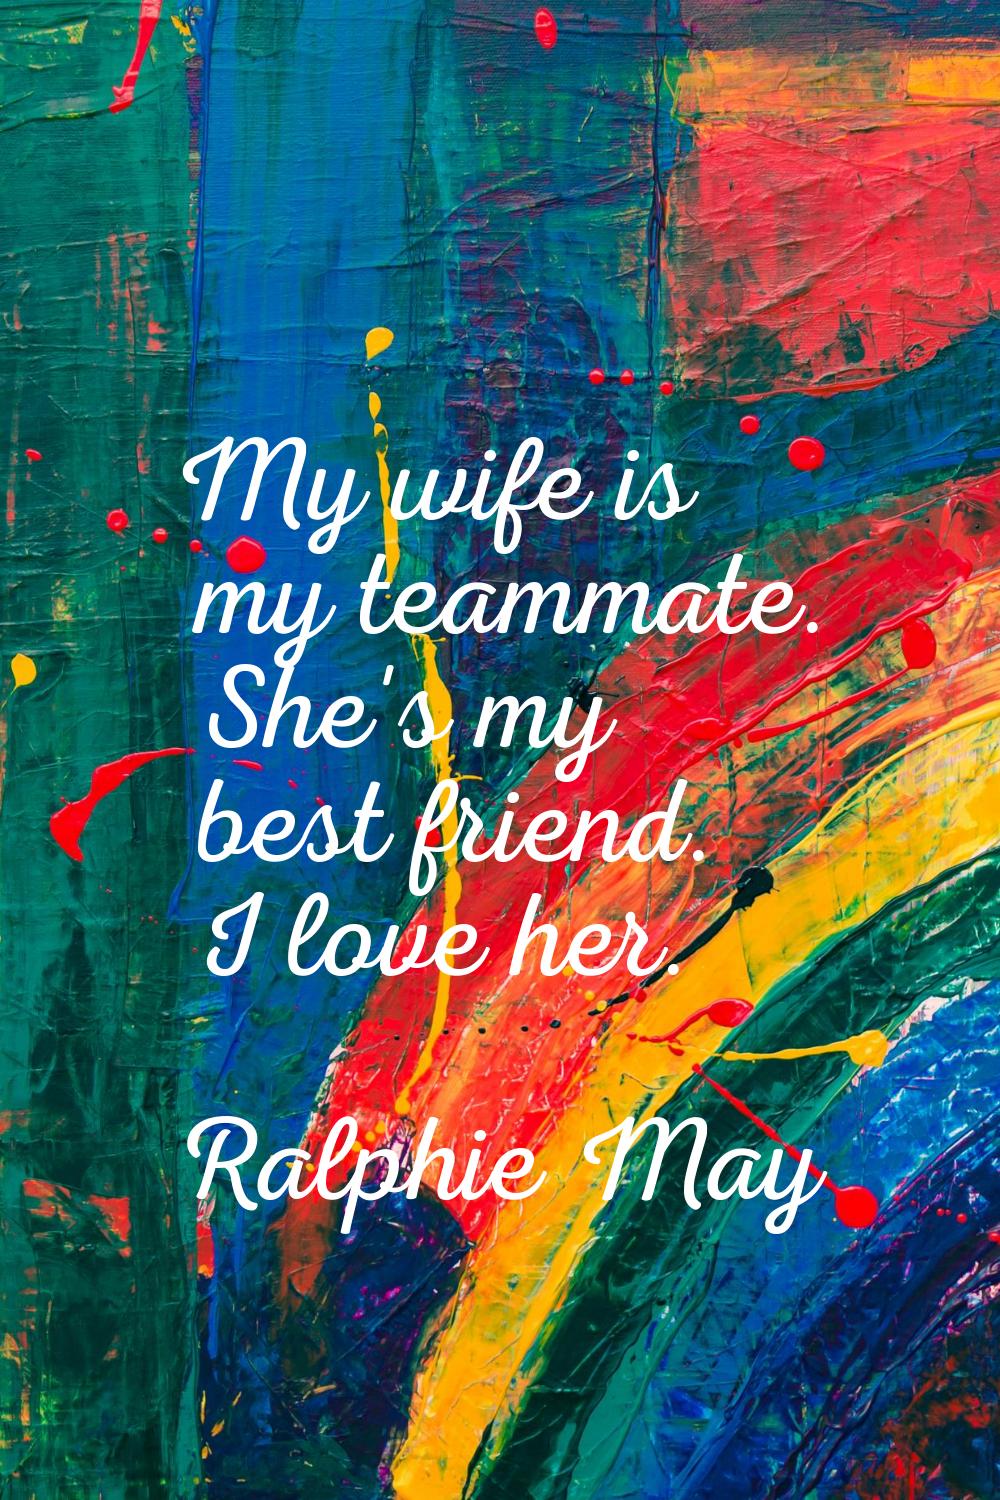 My wife is my teammate. She's my best friend. I love her.